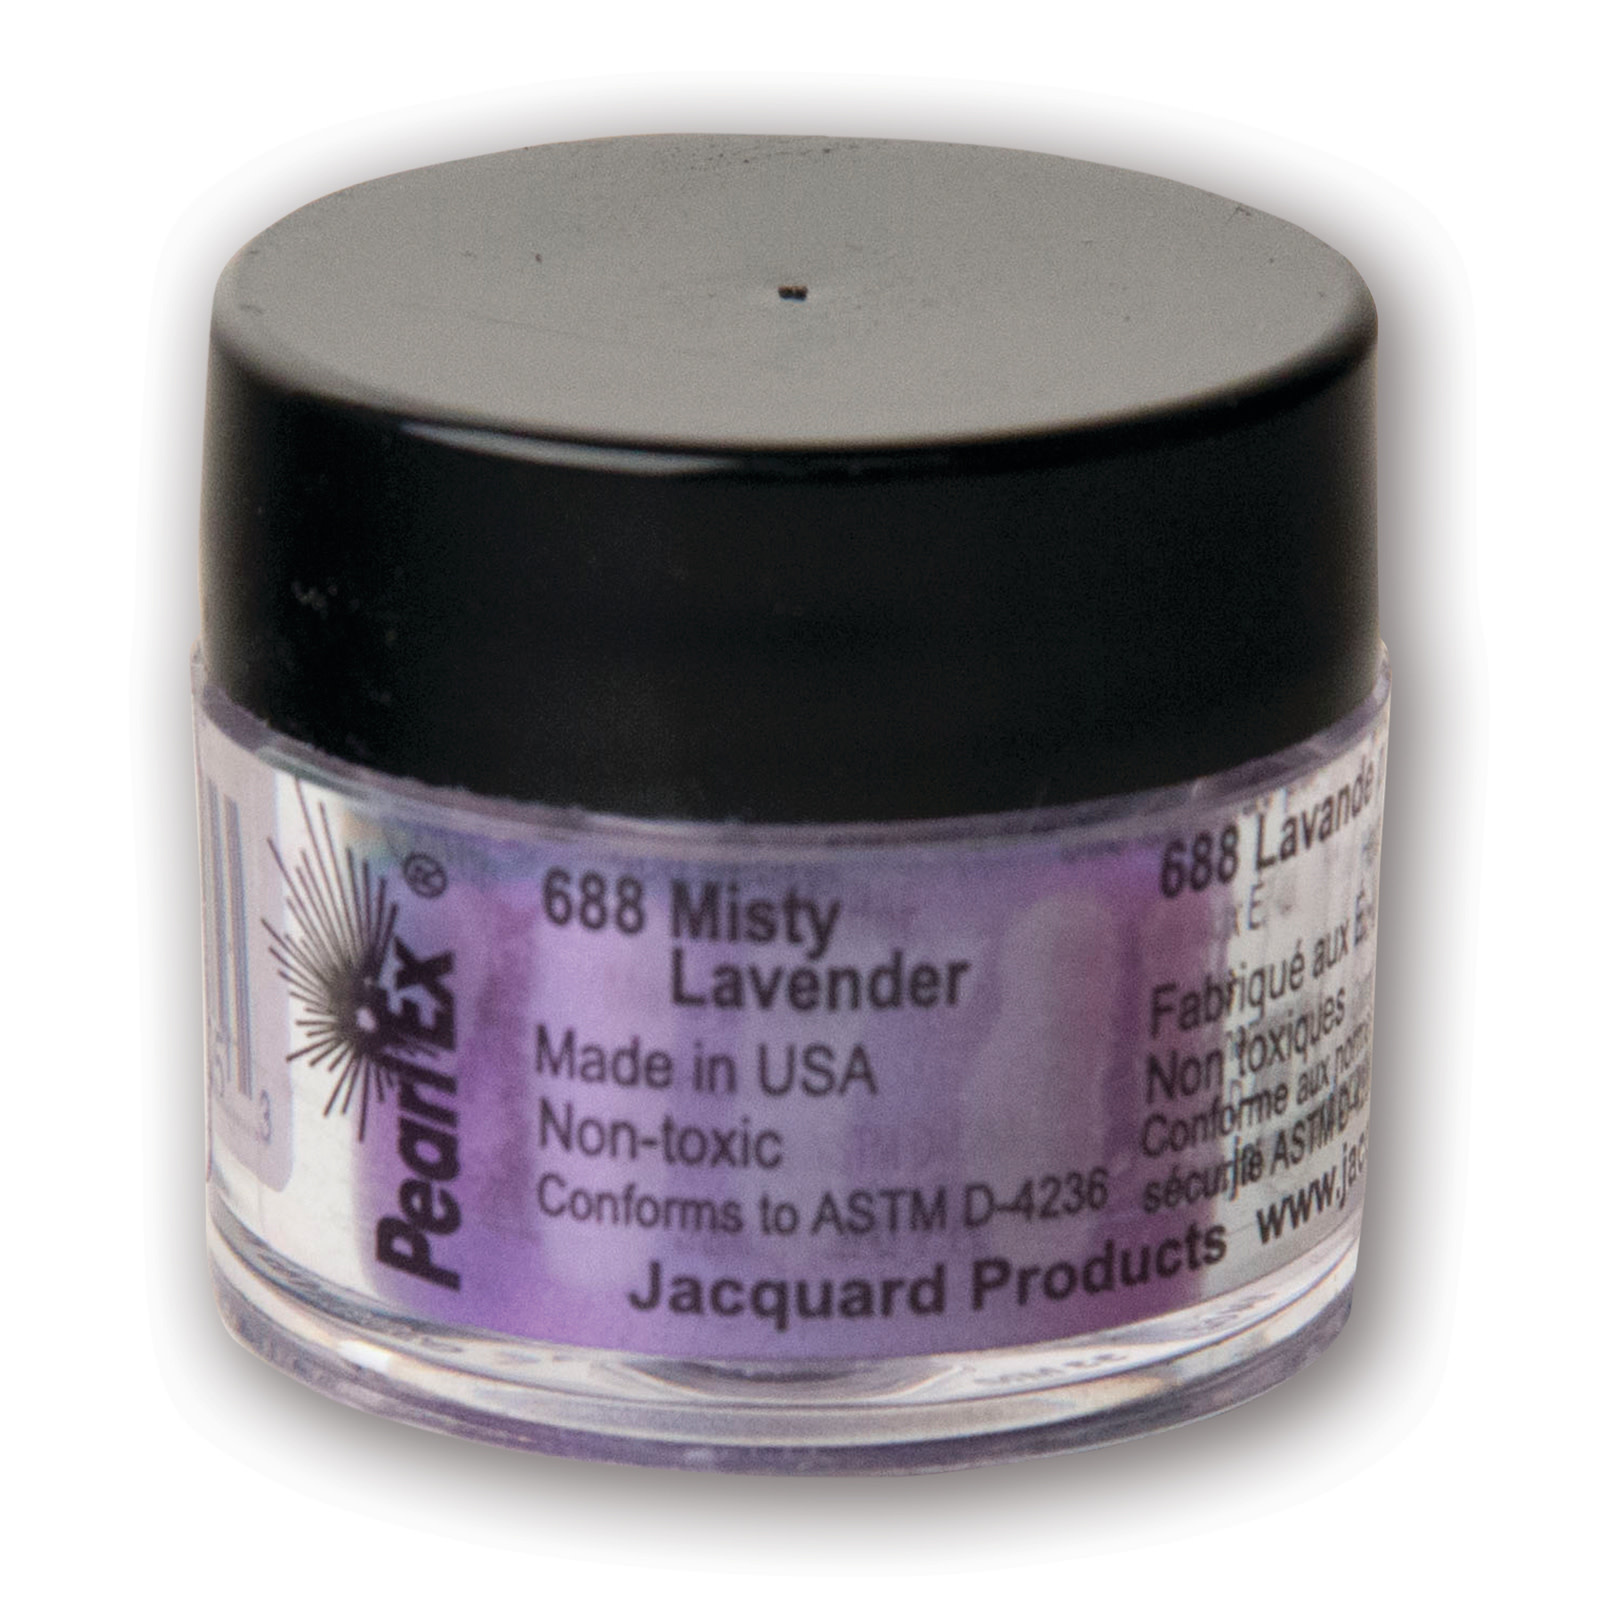 Jacquard Pearl Ex Powdered Pigments, 3g Jars, Misty Lavender